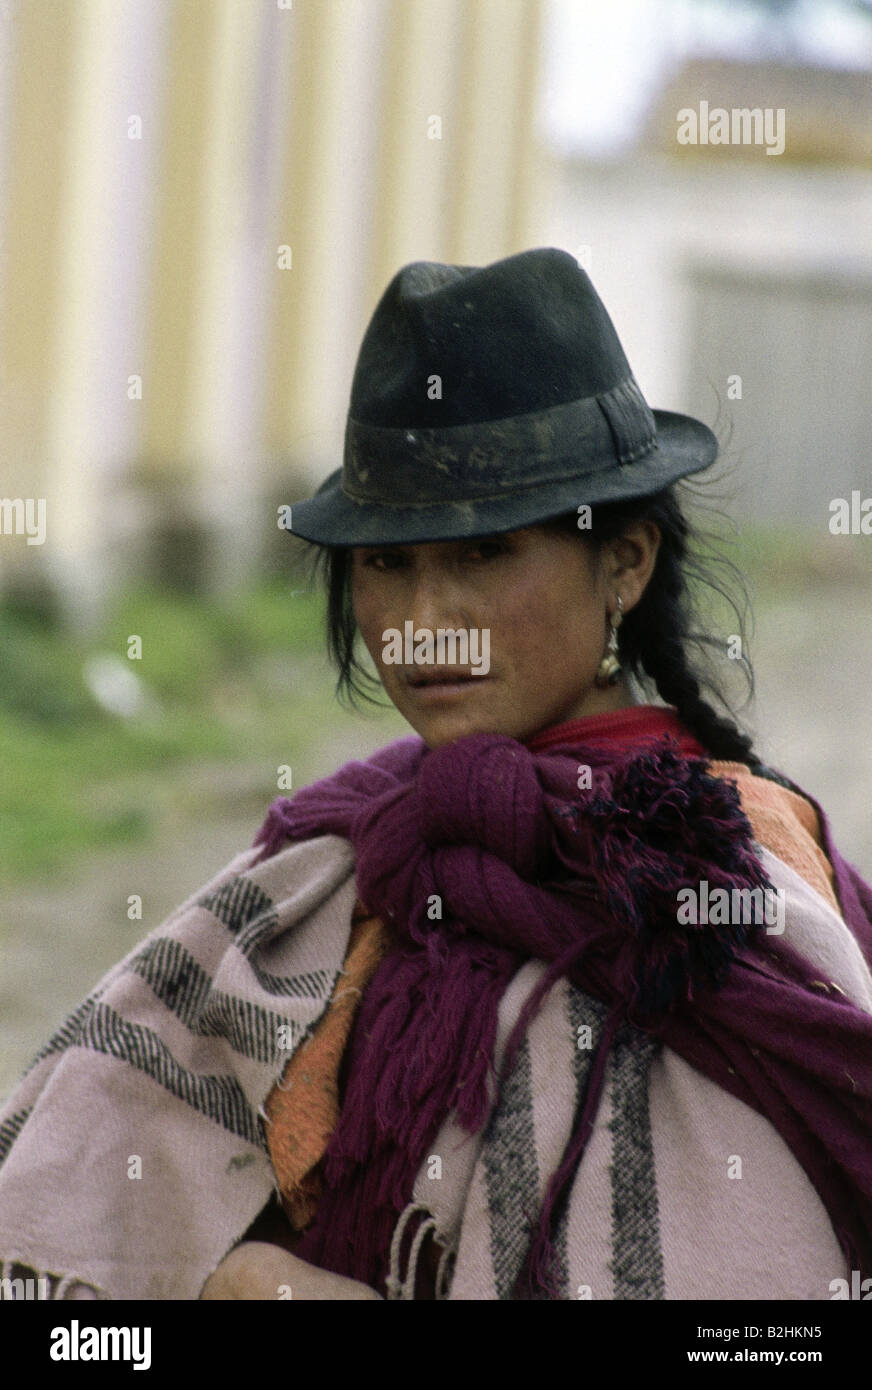 Menschen Frauen Ecuador Riobamba Frau Mit Hut Ethnisch Ethnologie Sudamerika Portrat Native Indigene Frau Soam Stockfotografie Alamy